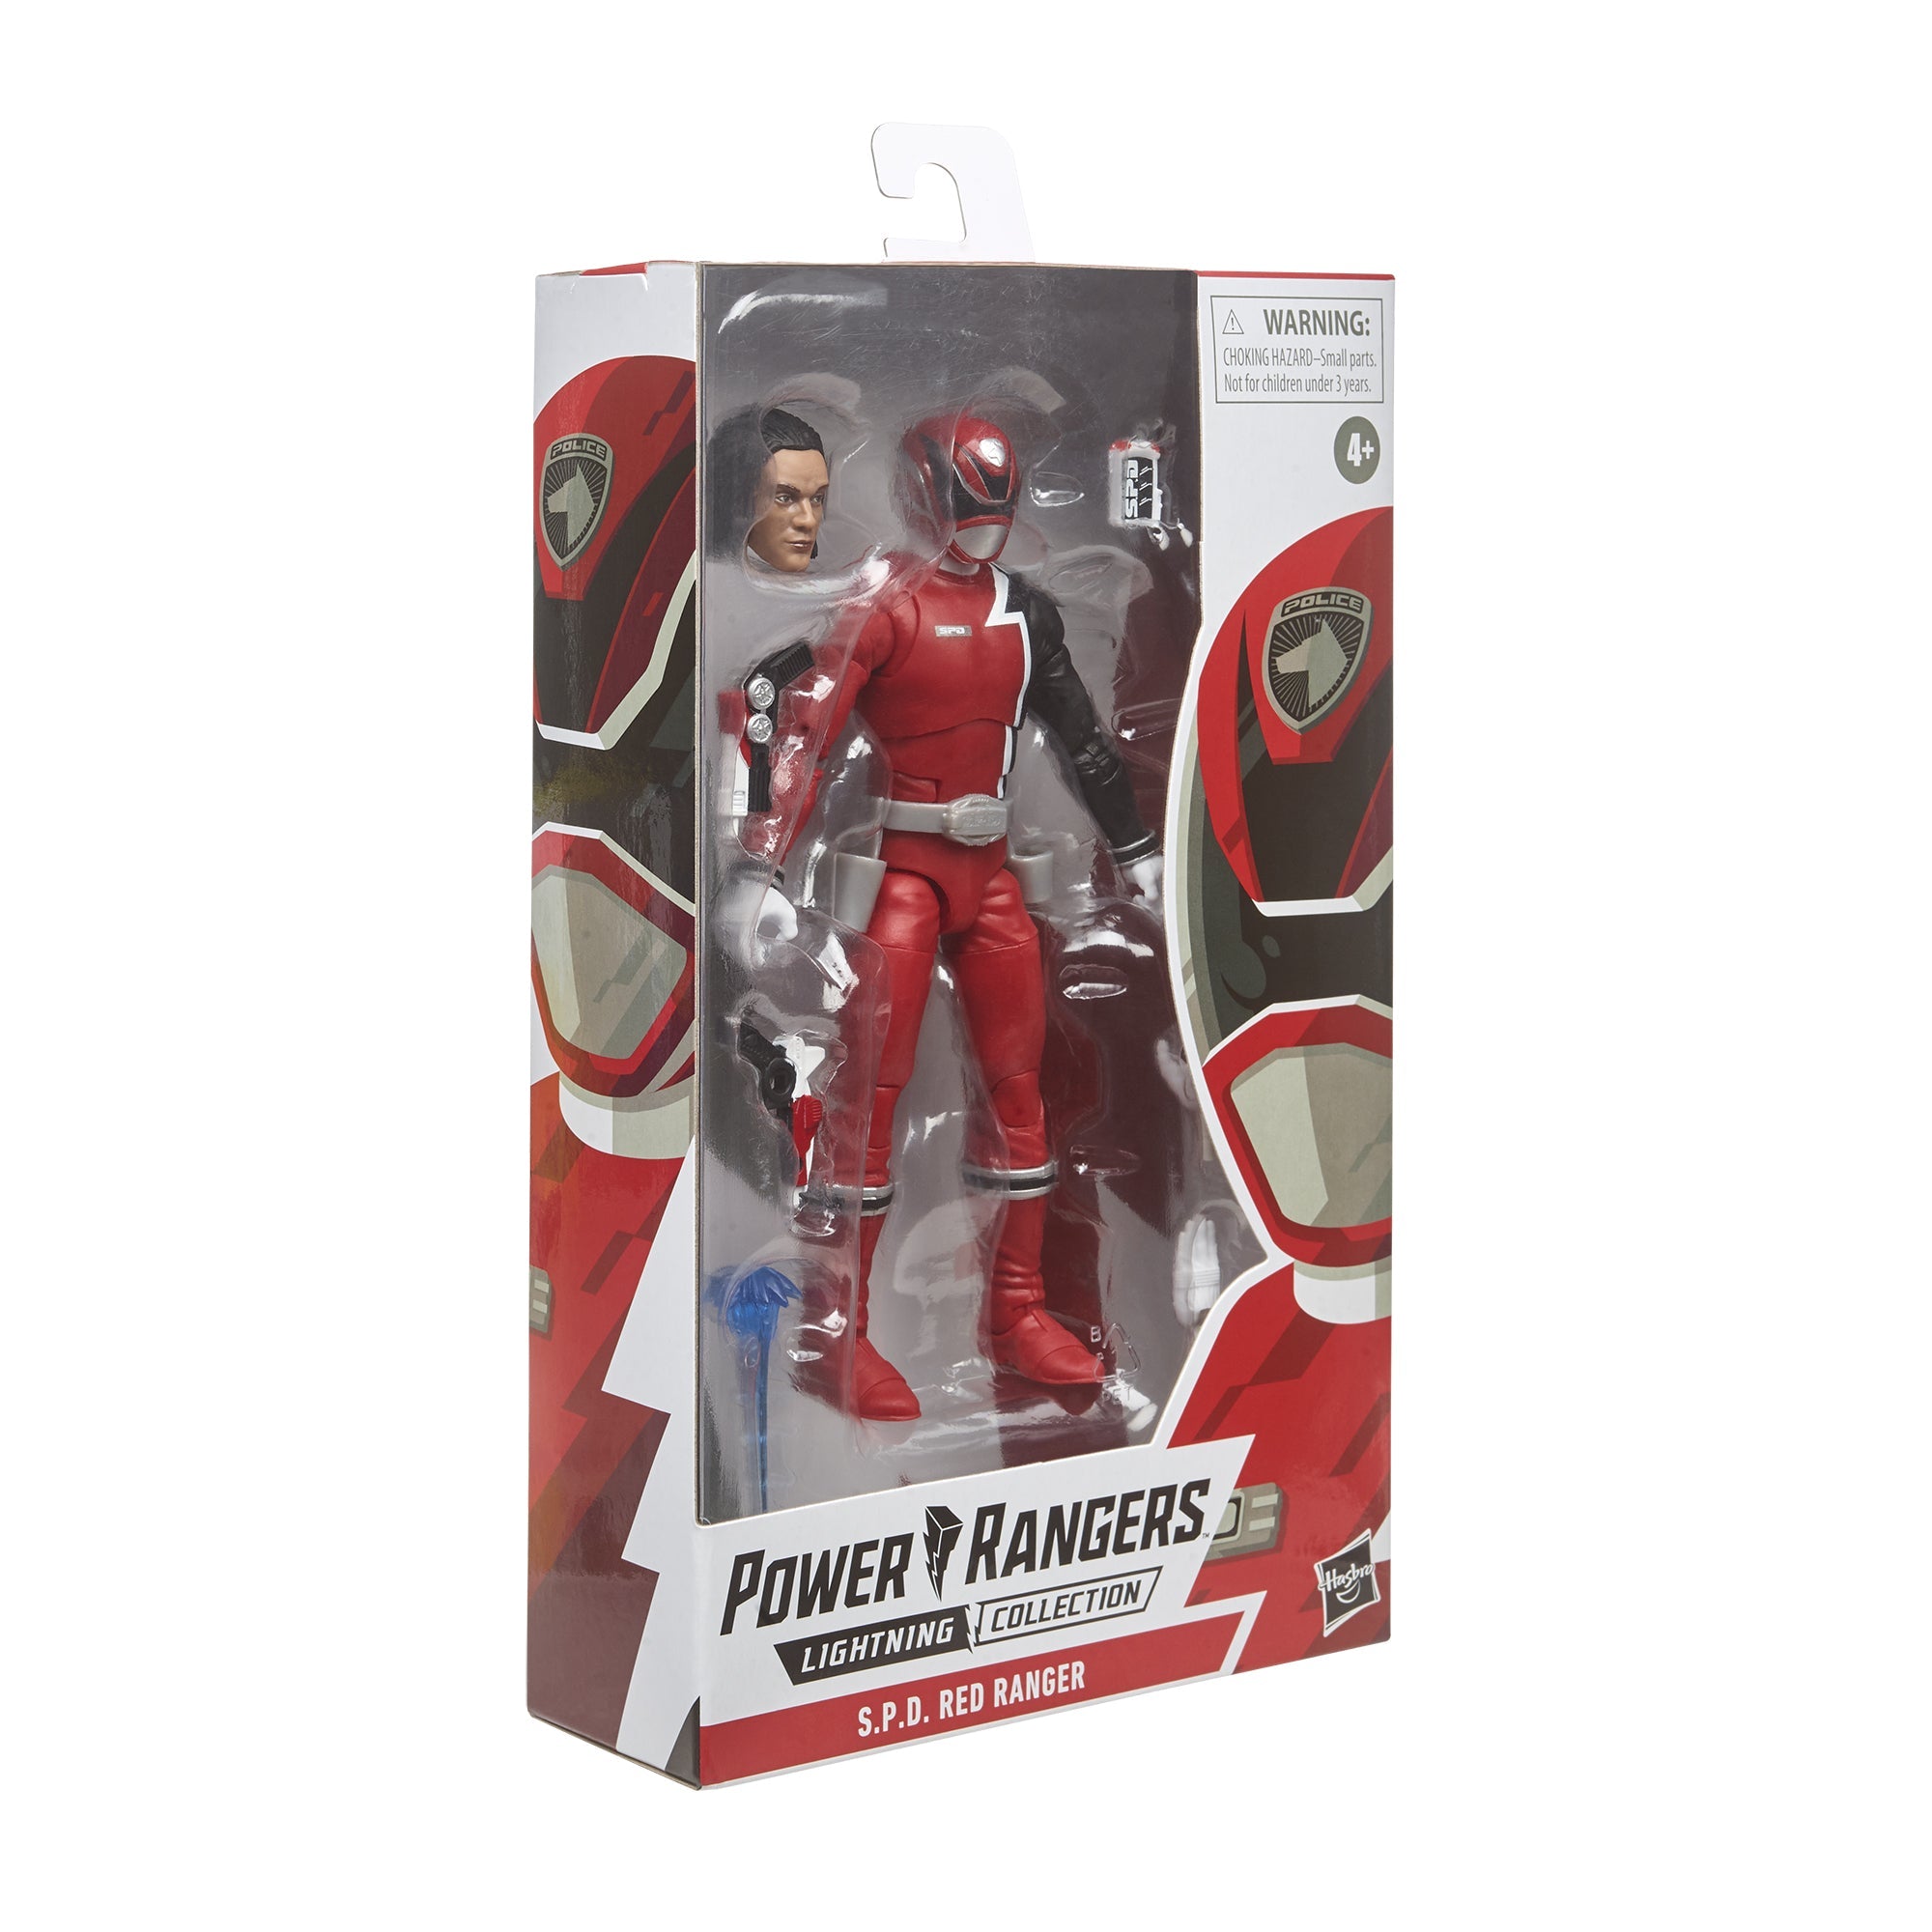 Power Rangers Lightning Collection S.P.D. Red Ranger Figure